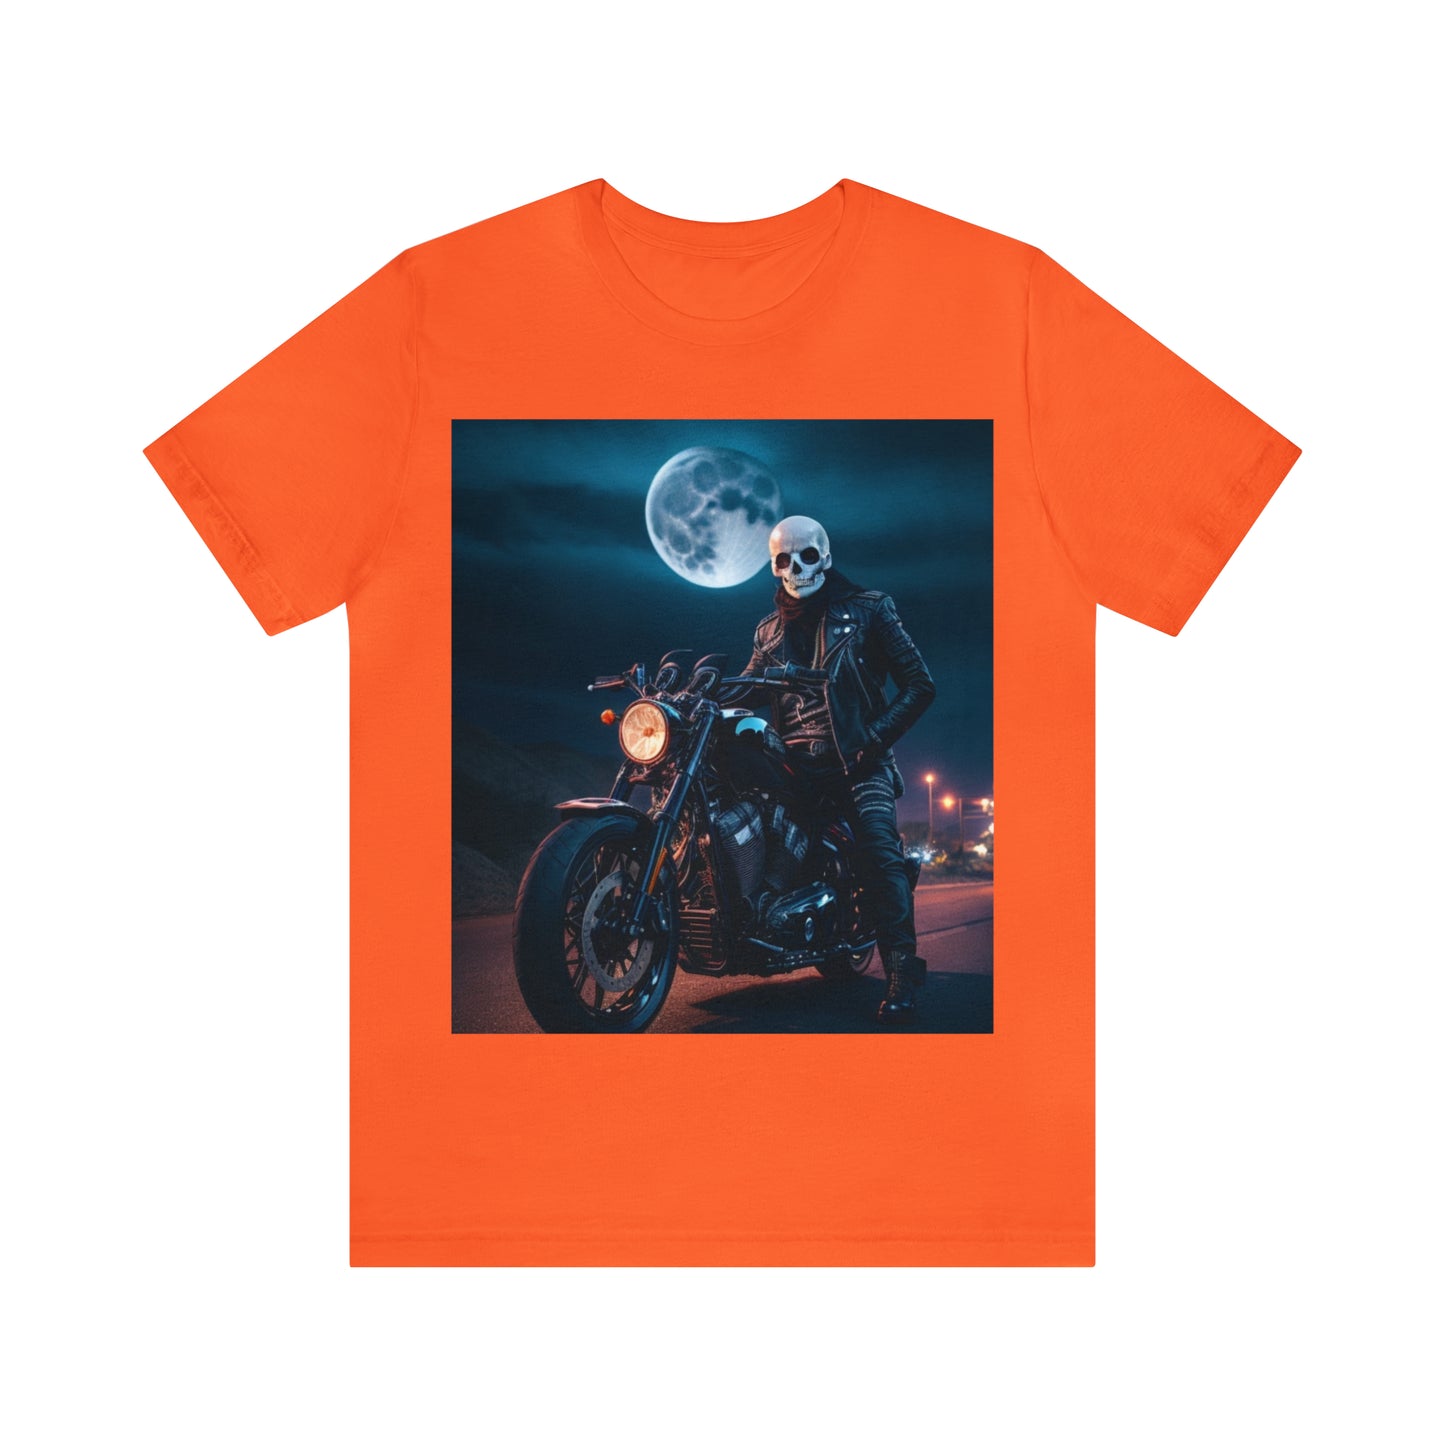 Camiseta de manga corta Unisex Jersey - Halloween Motociclista AI - 02